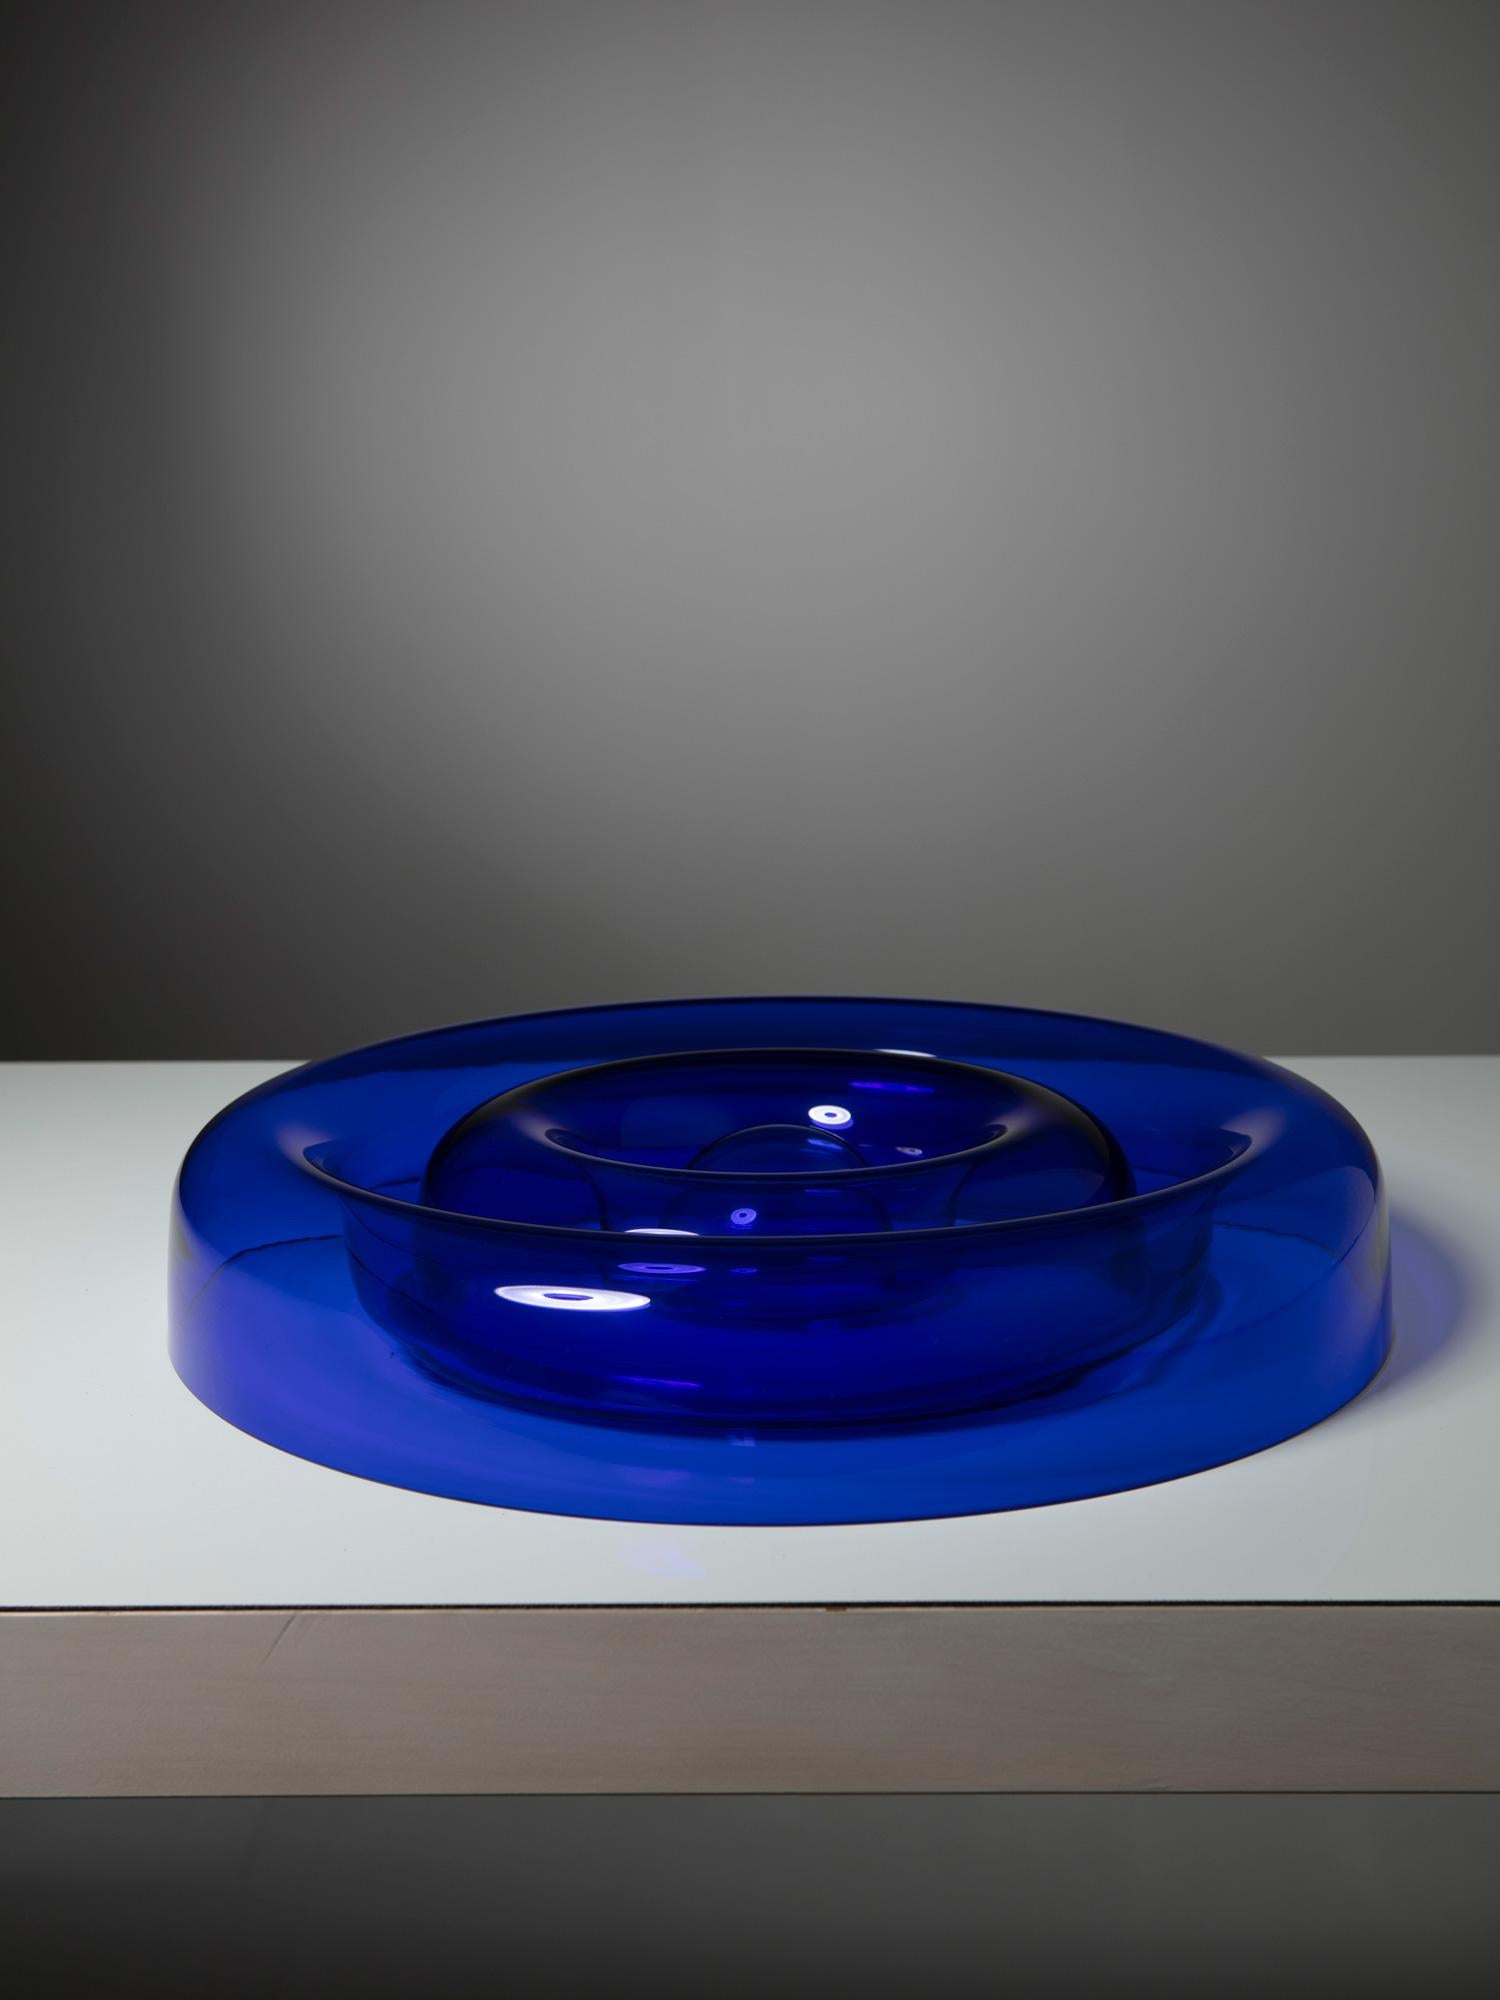 Rare cobalt blue glass centerpiece manufactured by Vistosi.